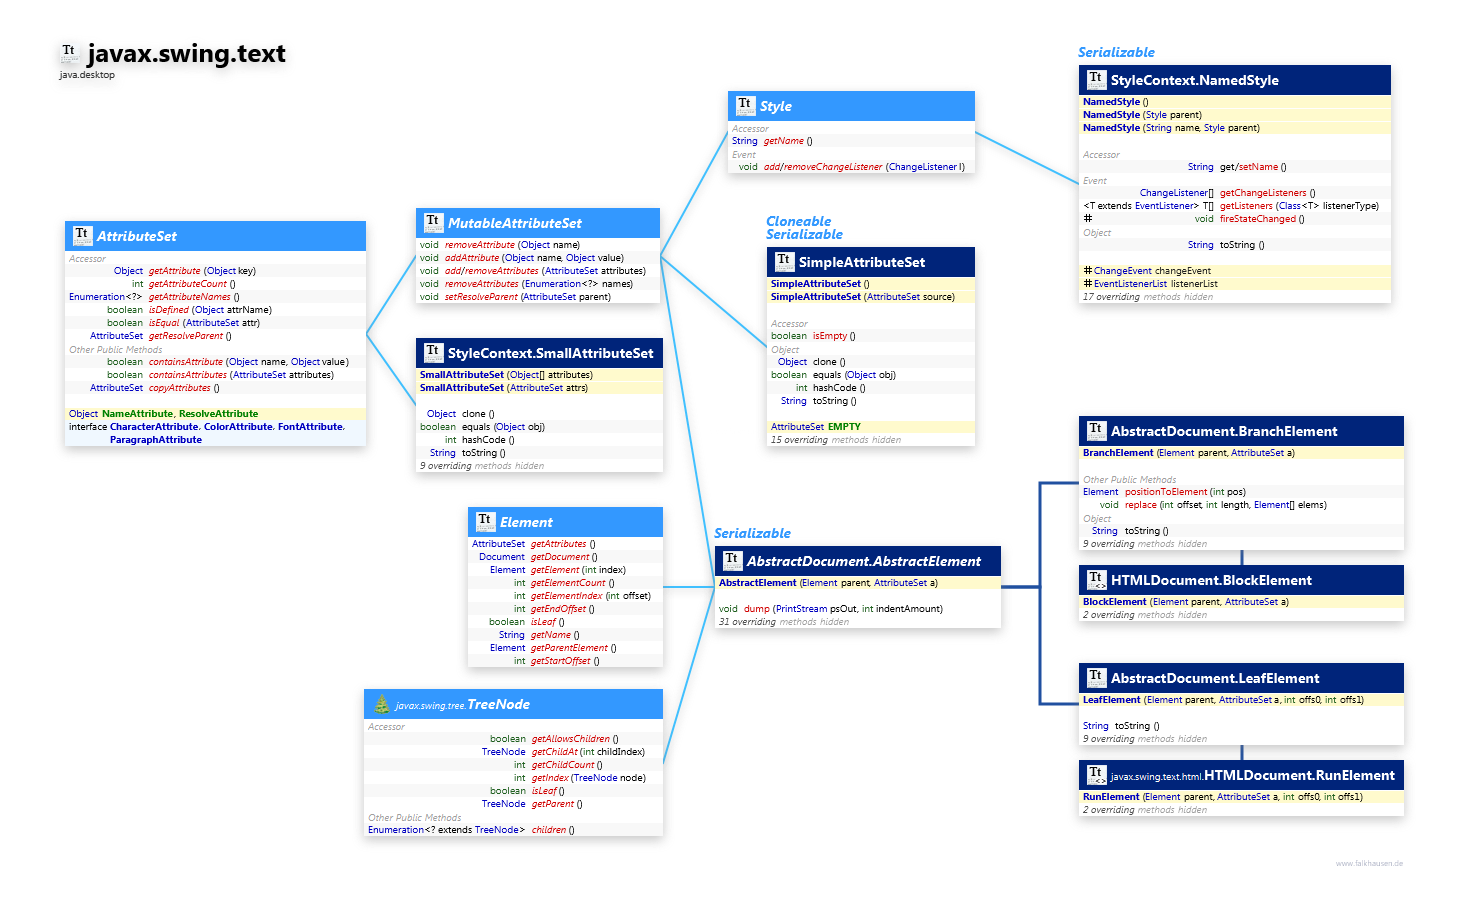 javax.swing.text AttributeSet, Element class diagram and api documentation for Java 10